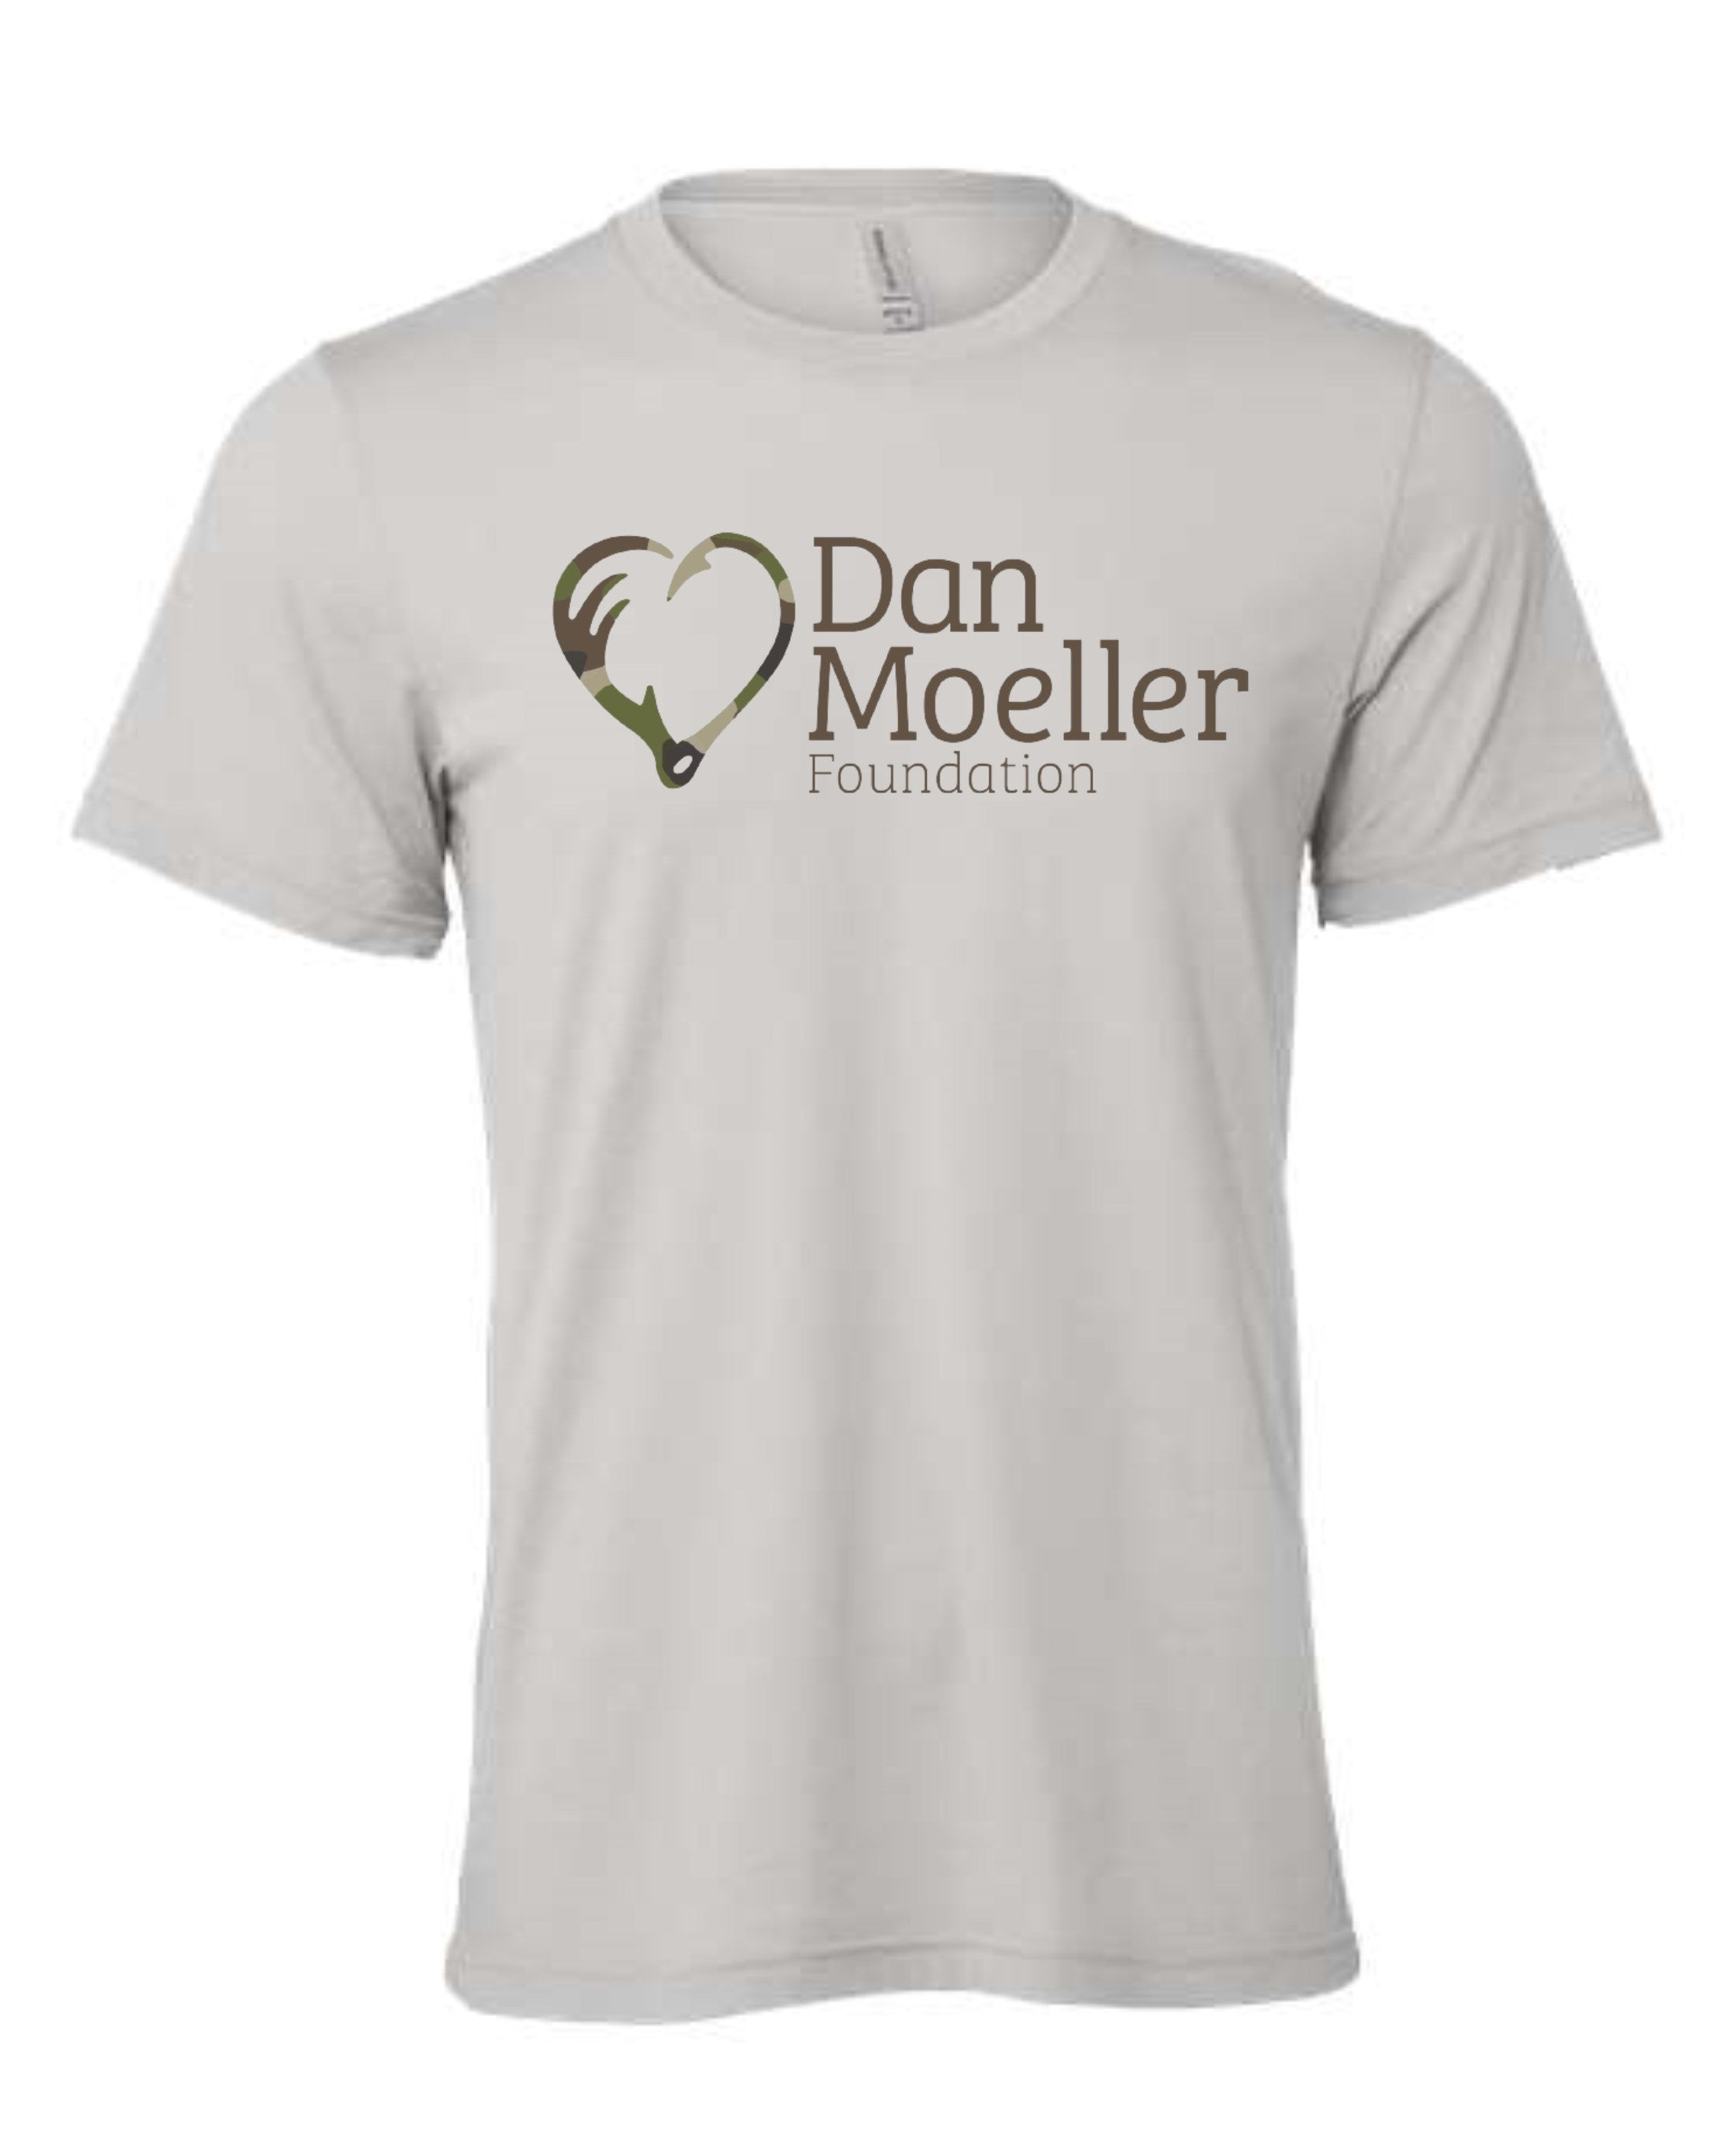 Dan Moeller Foundation Unisex Apparel